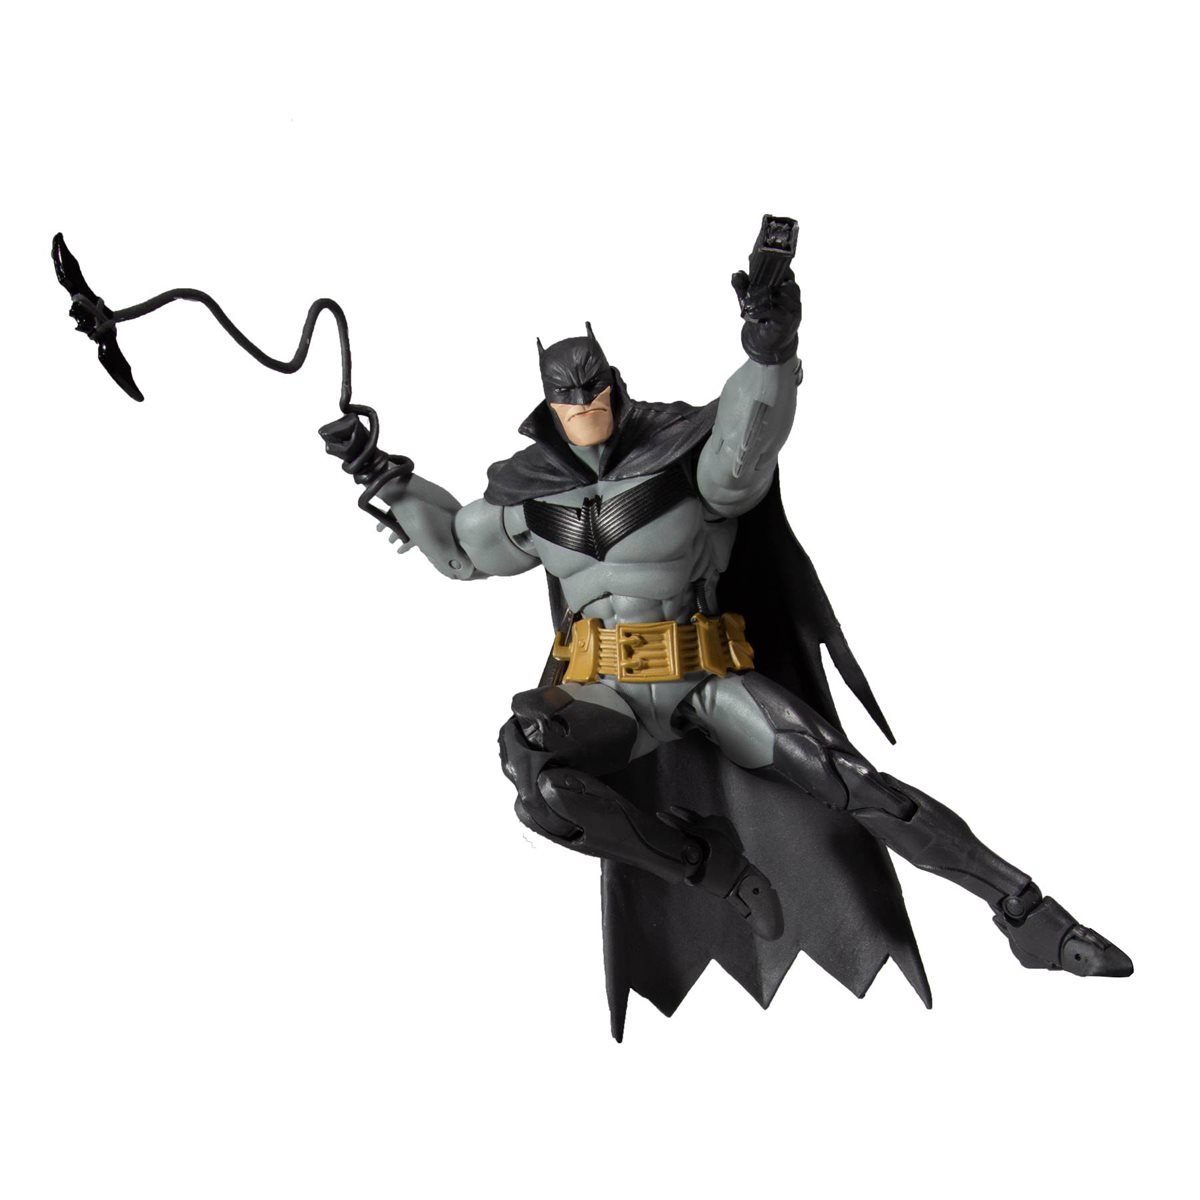 15406-1 for sale online McFarlane Toys DC Multiverse Batman White Knight 7 Inch Action Figure 